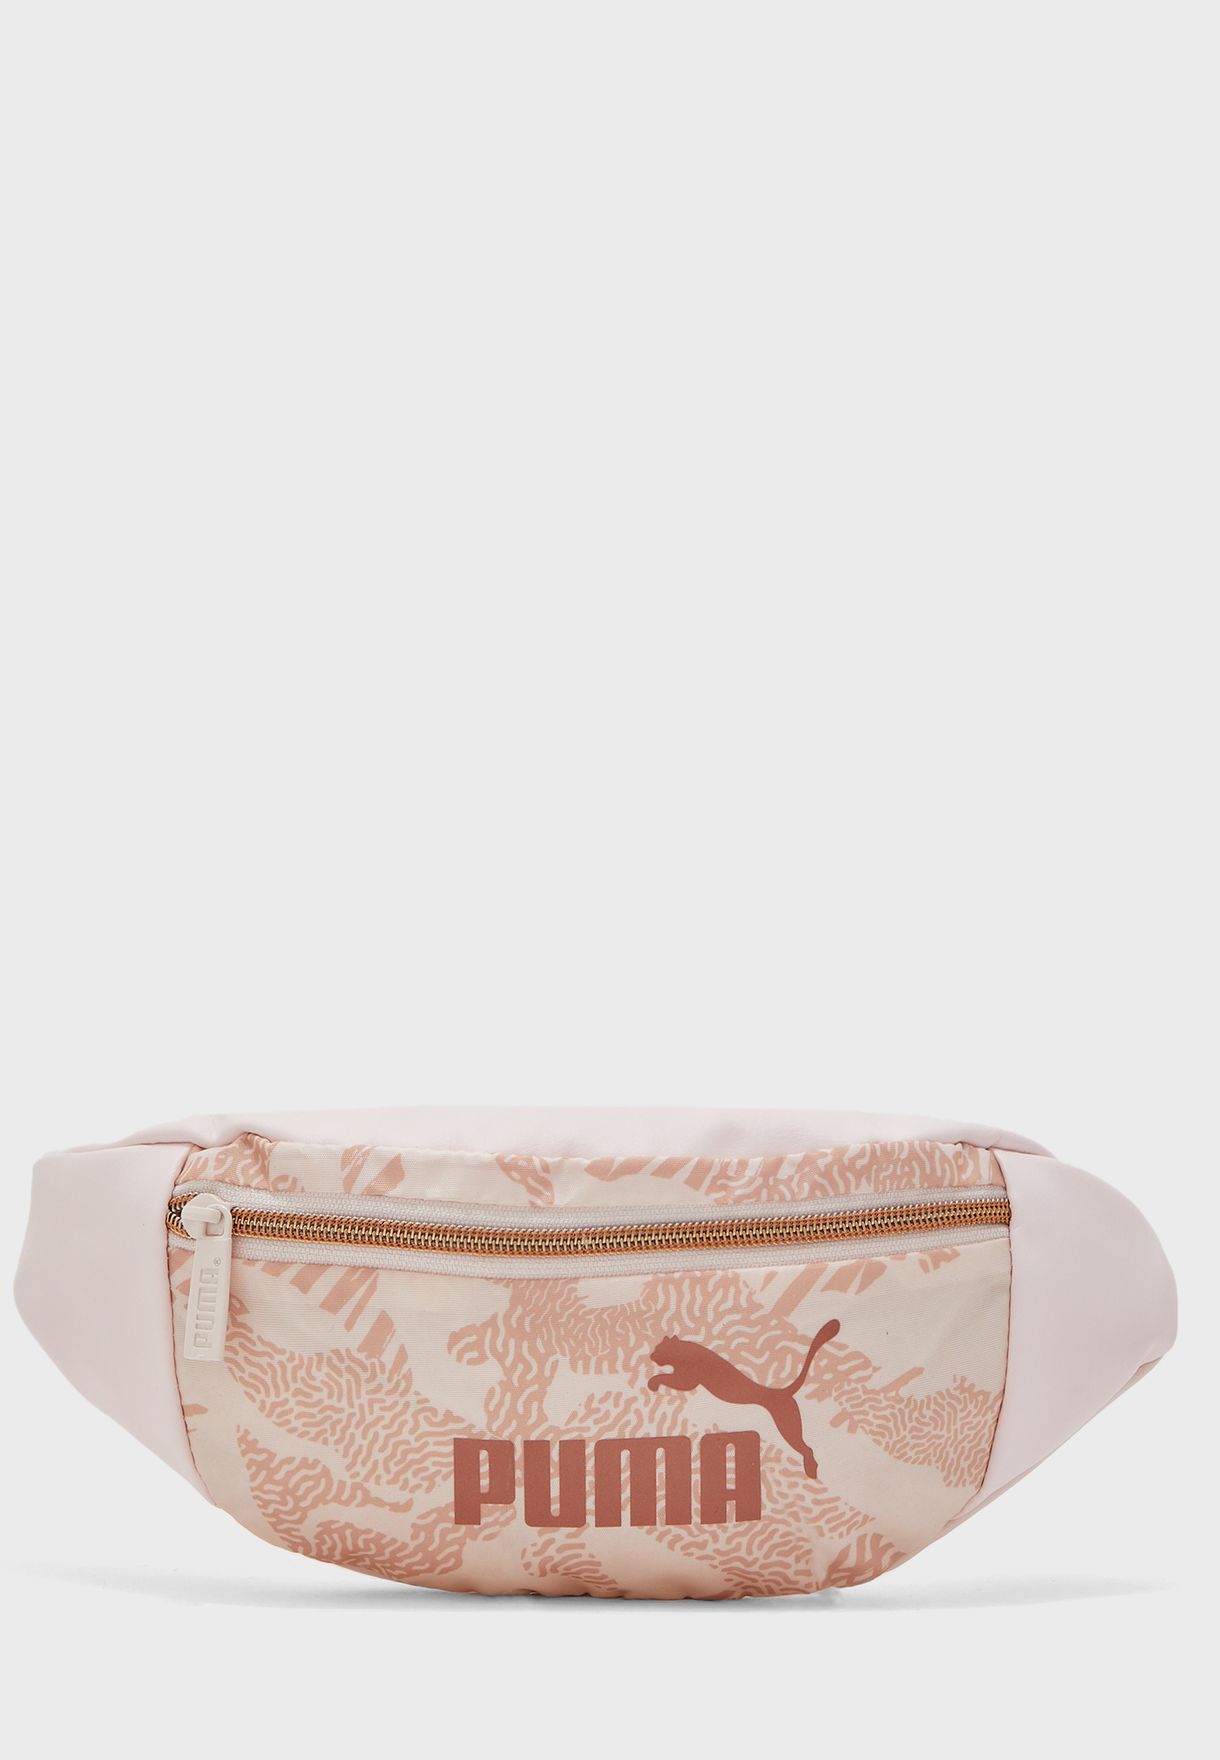 puma waist bag pink